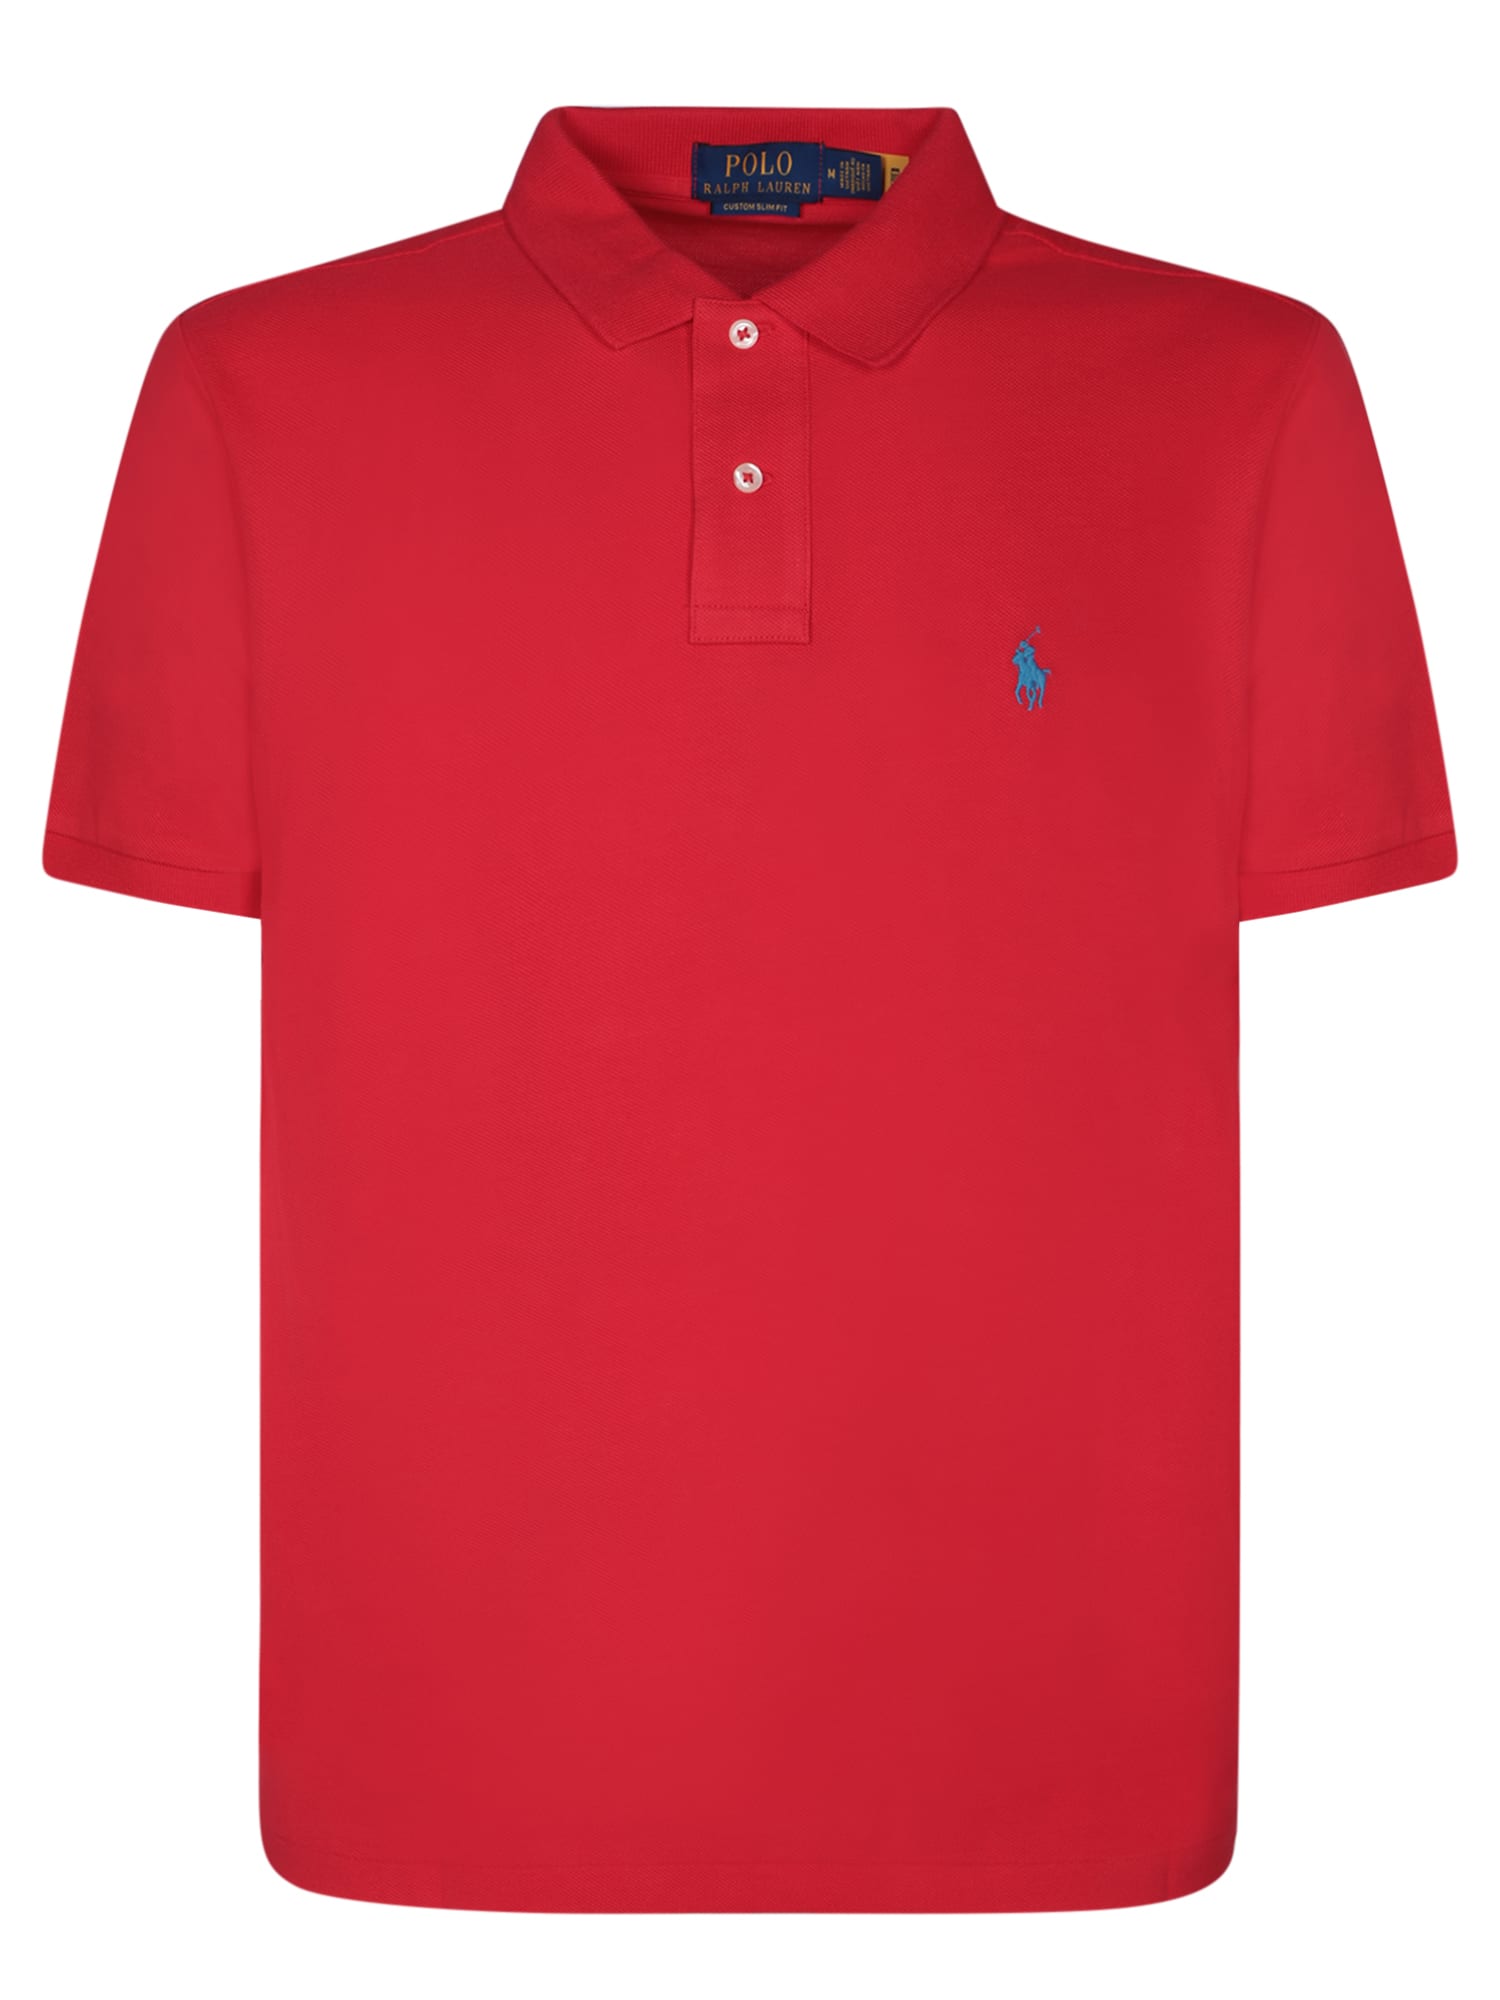 Shop Polo Ralph Lauren Red Piquet Polo Shirt By